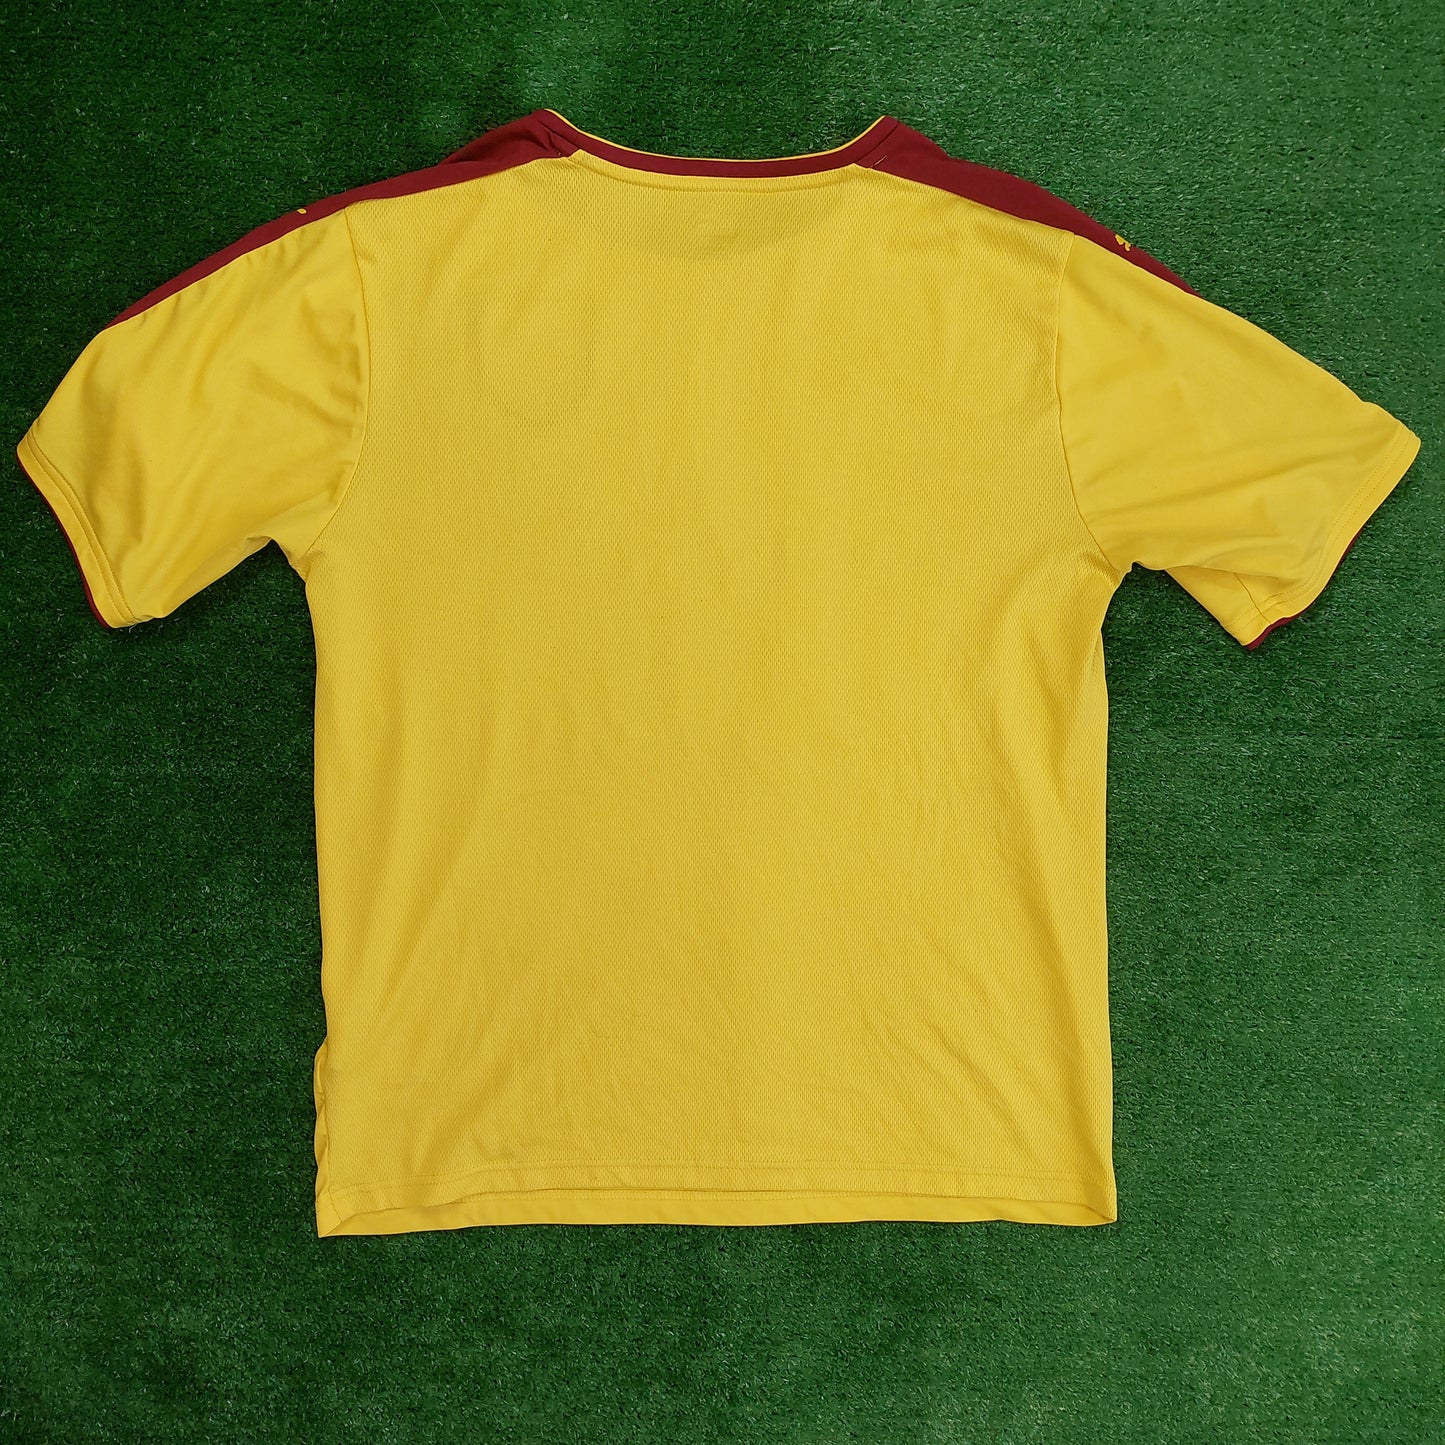 Burnley 2015/16 Away Shirt (Very Good) - Size L